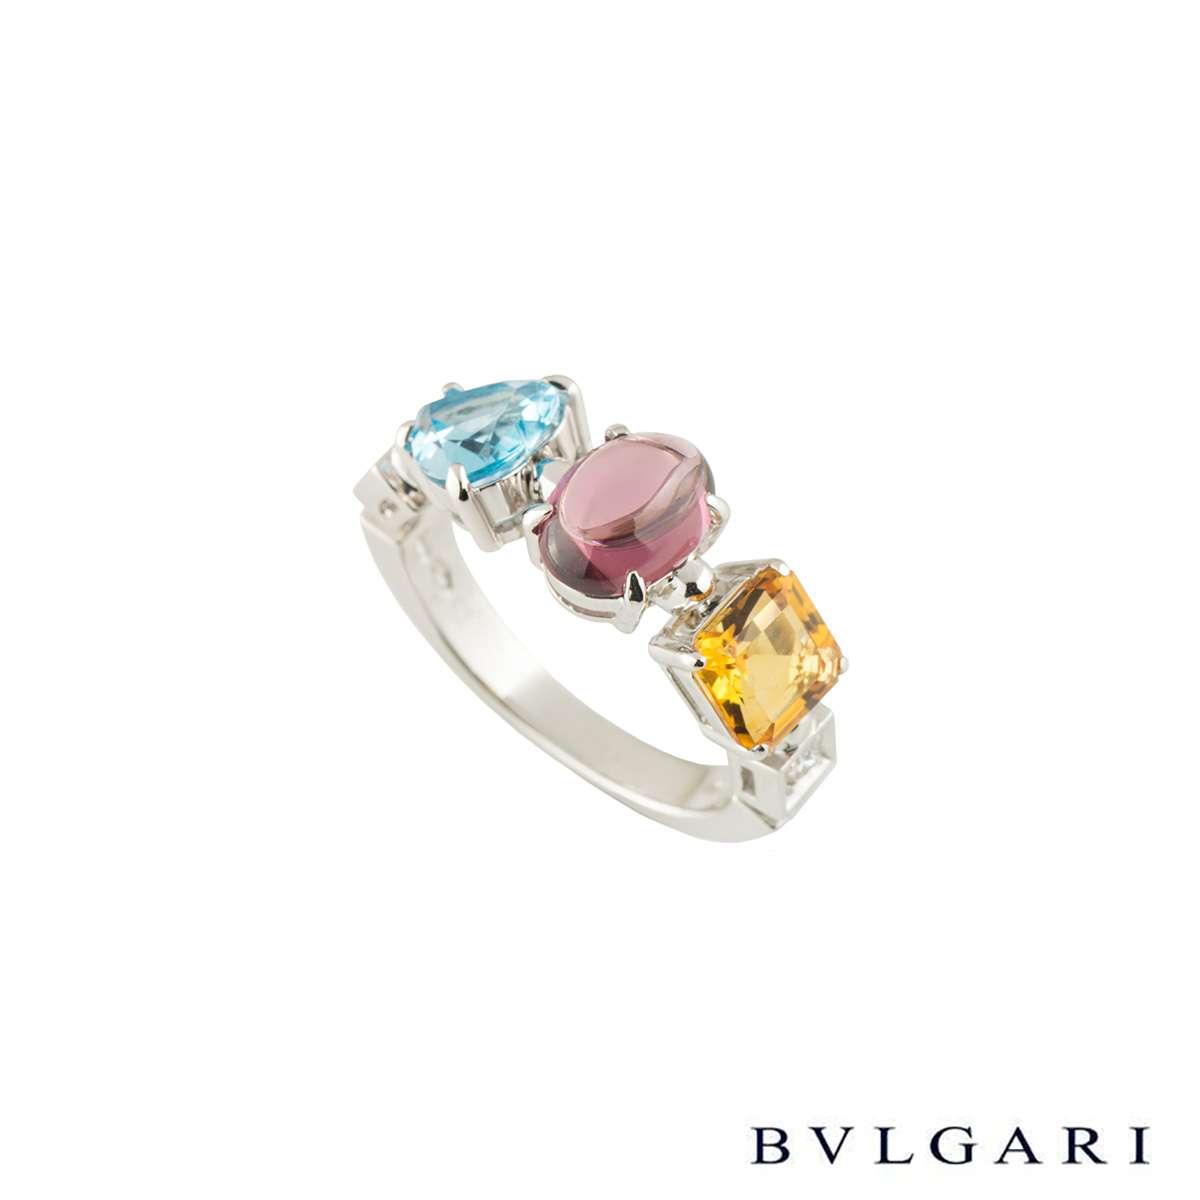 Bvlgari Bvlgari Allegra Ring 18K White Gold with Multicolor Gemstones and Diamonds 